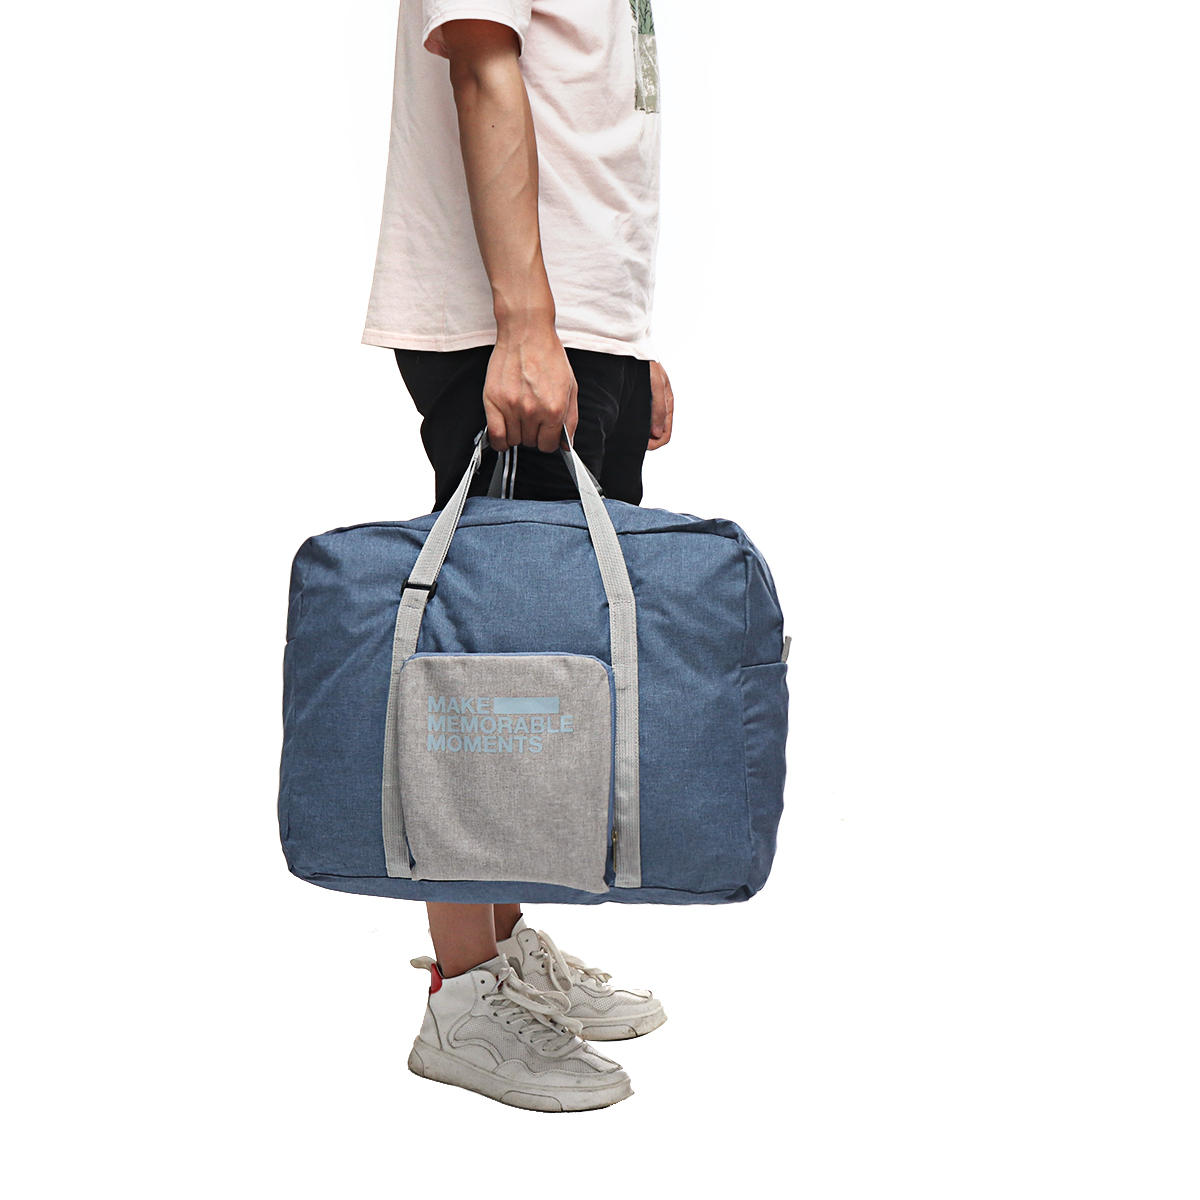 waterdichte reistas bagage garderobe pak jurk kledingstuk carrier suiter case suitbag cover bag